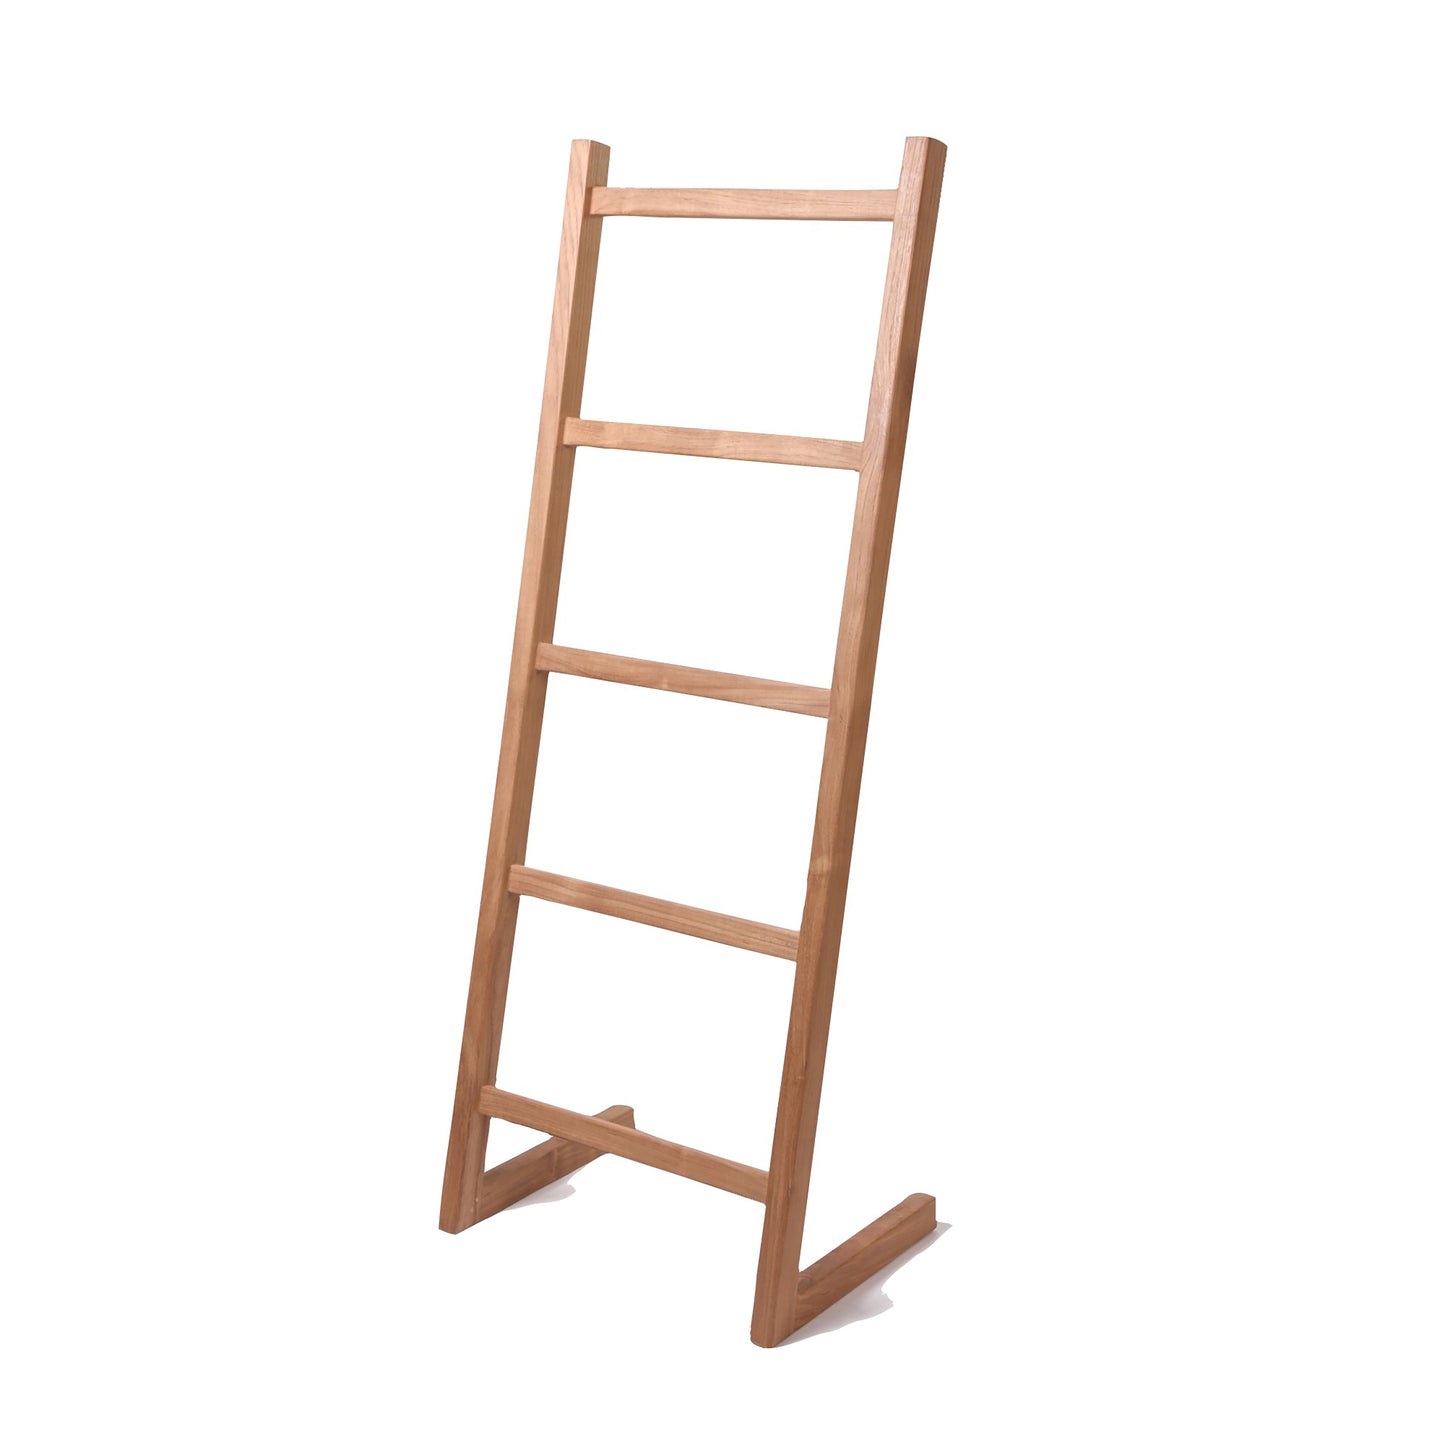 Teak Self-standing Towel Ladder 59" (150 cm) with 5 bars